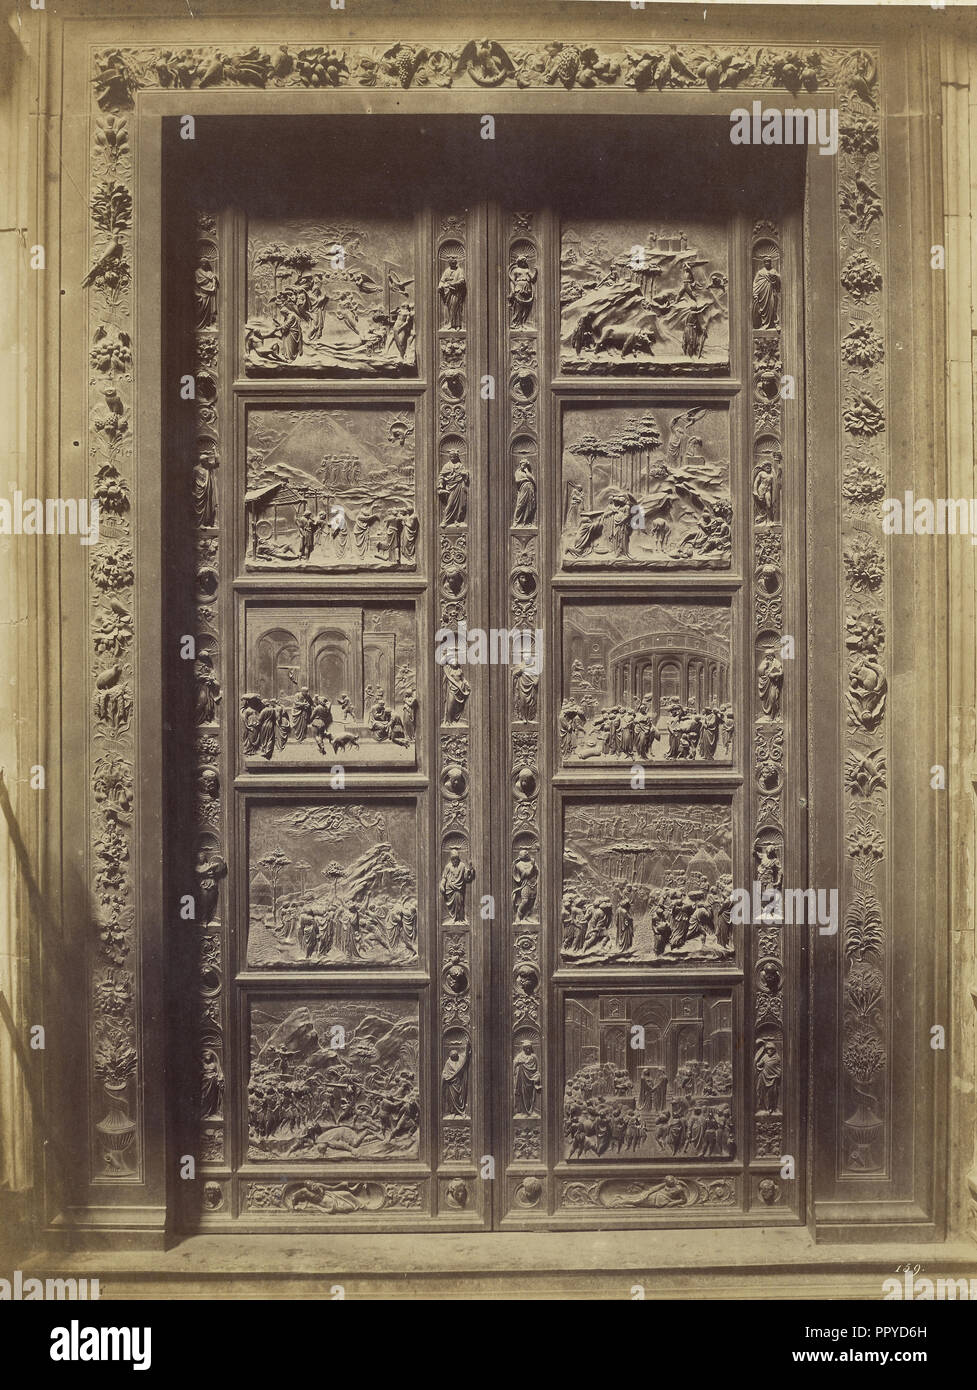 Baptistry of San Giovanni Doors; Fratelli Alinari, Italian, founded 1852, Florence, Italy; 1850s; Albumen silver print Stock Photo